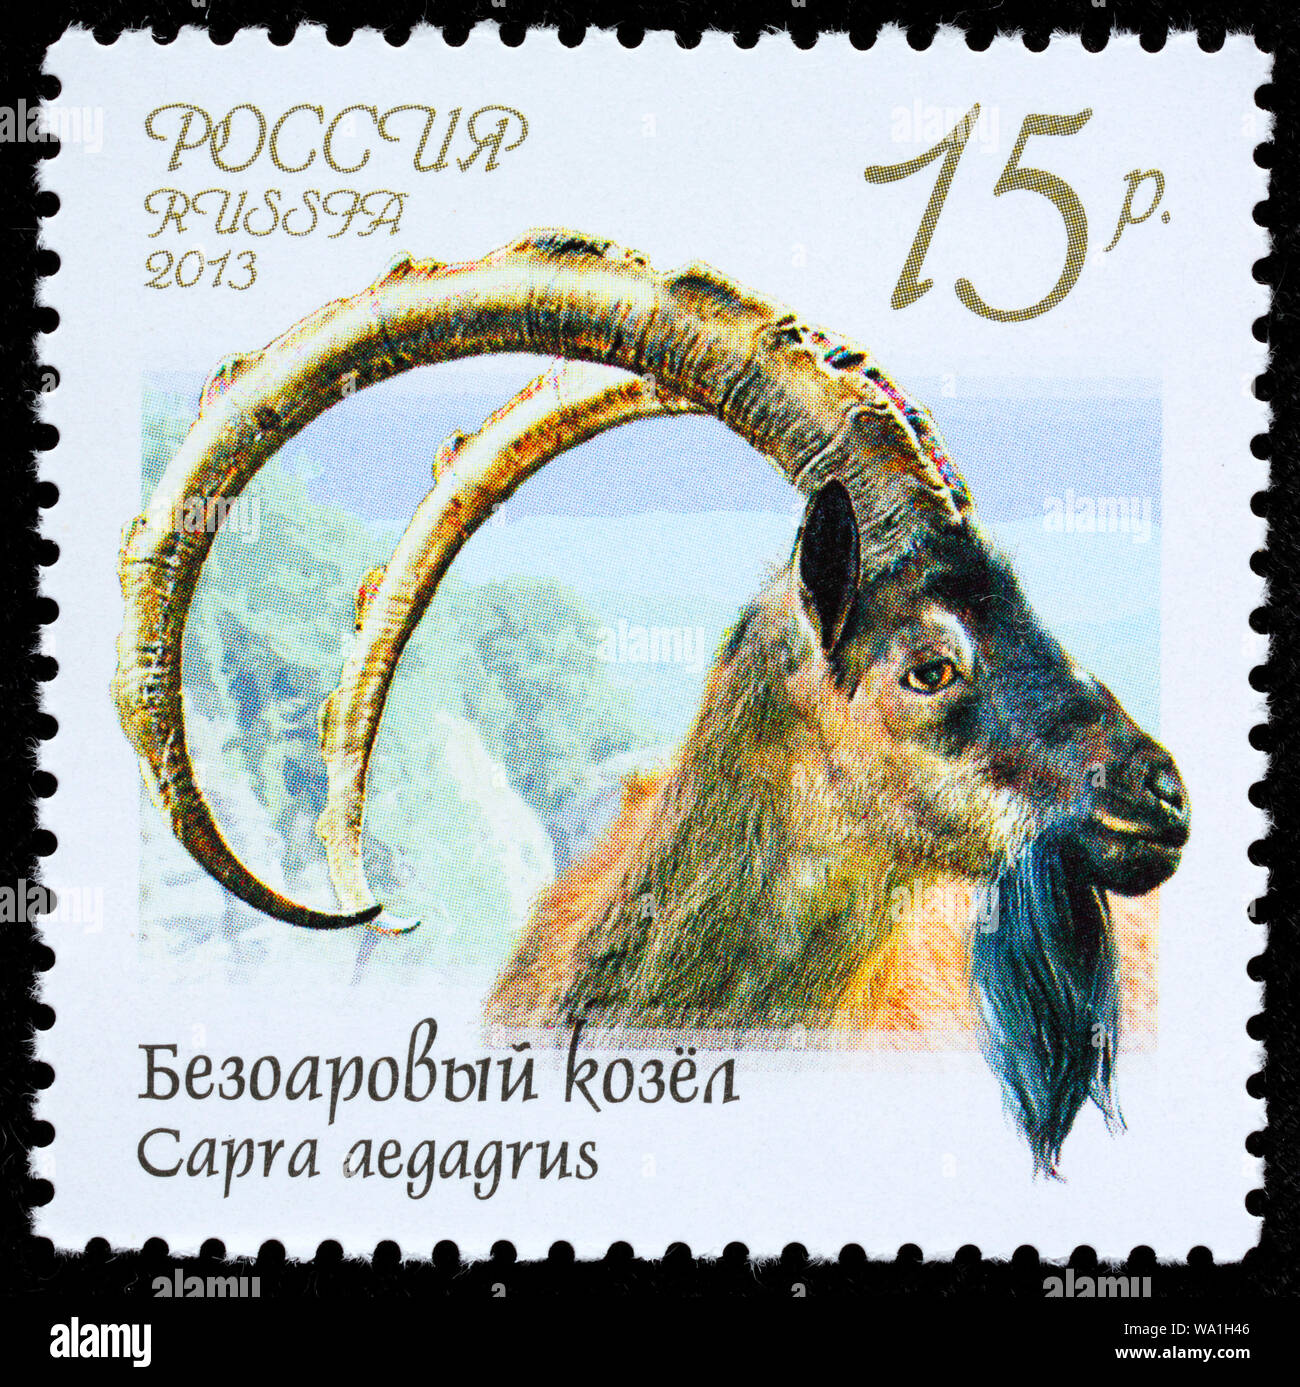 Capra aegagrus, Wild goat, Bezoar ibex, postage stamp, Russia, USSR, 2013 Stock Photo